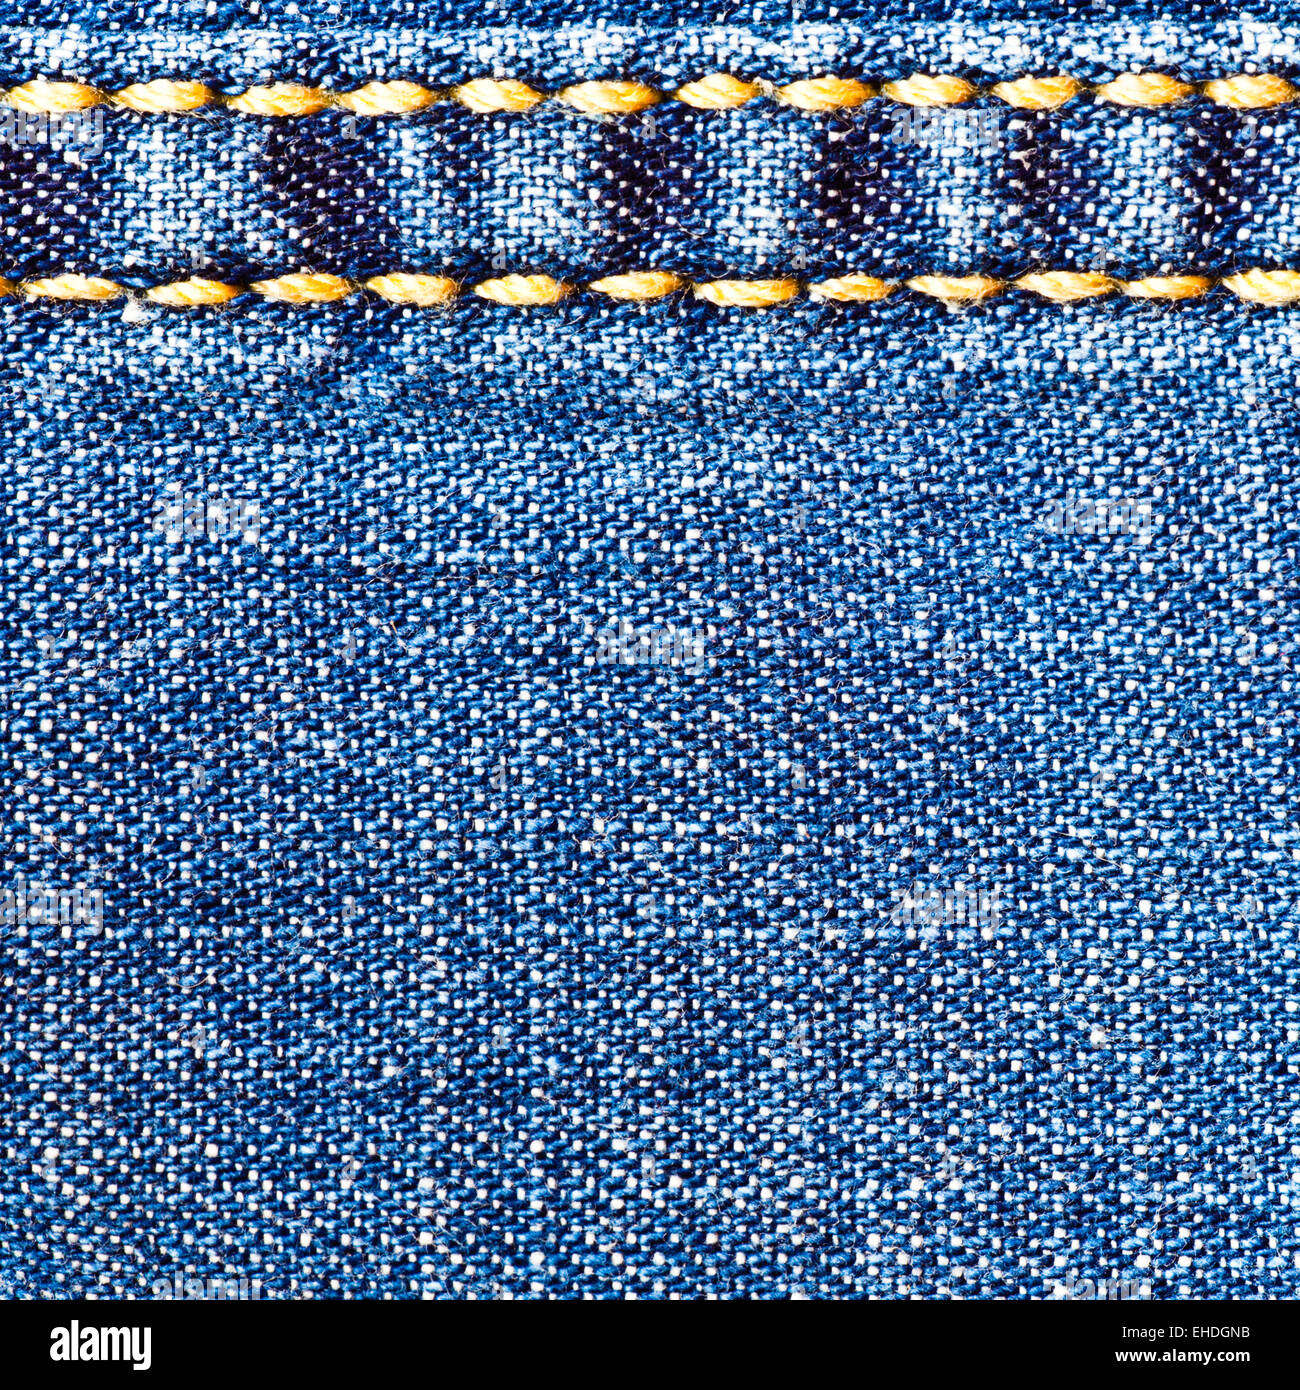 Blue jeans texture Stock Photo